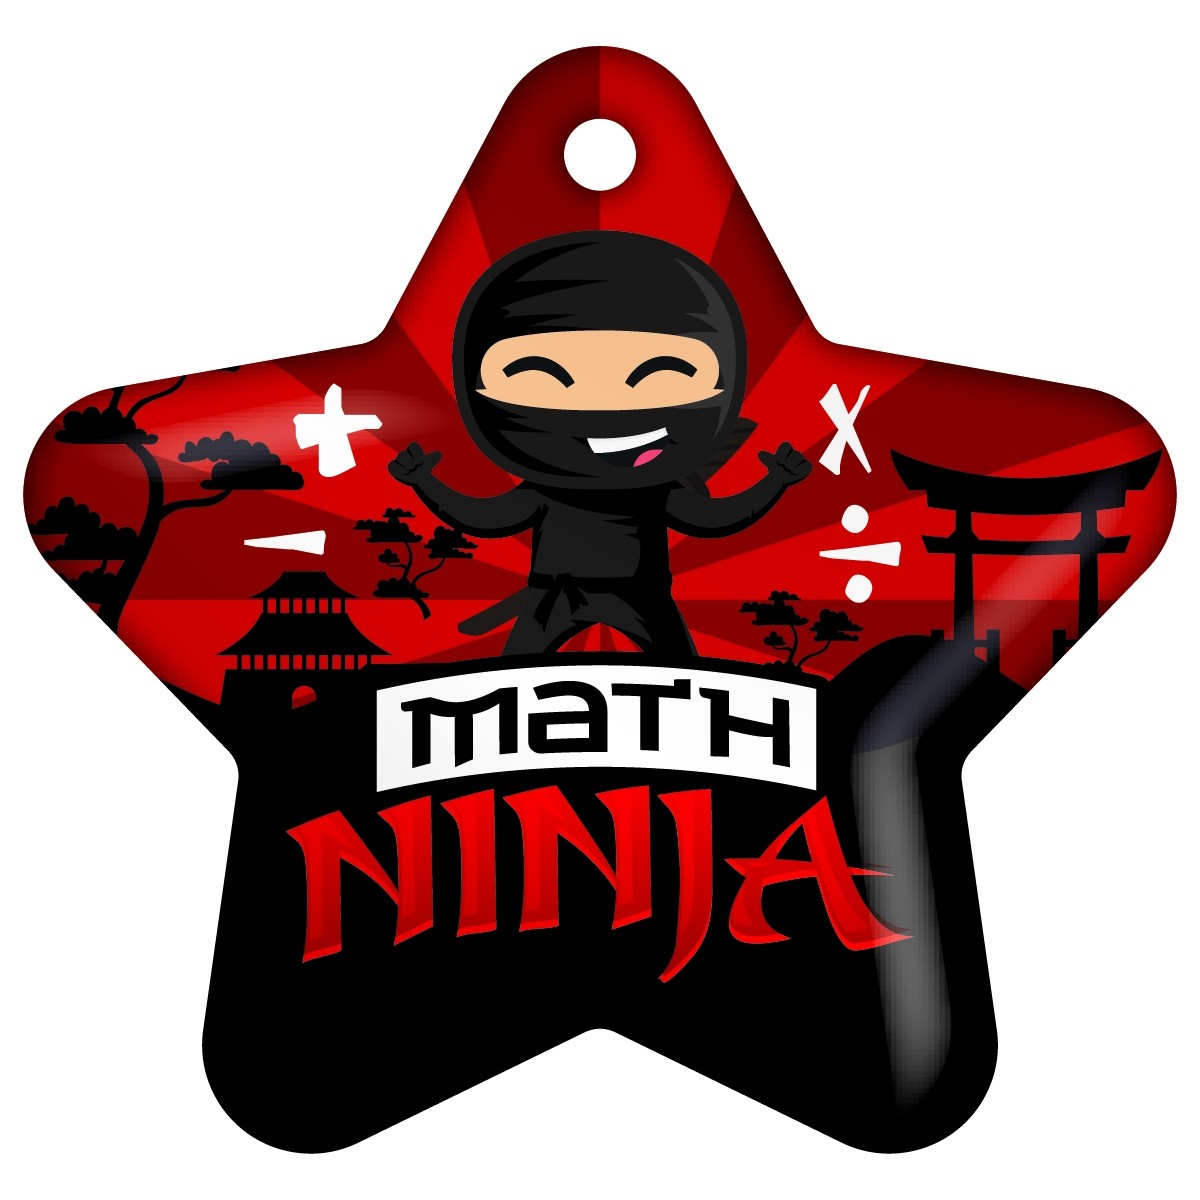 Math ninja star.